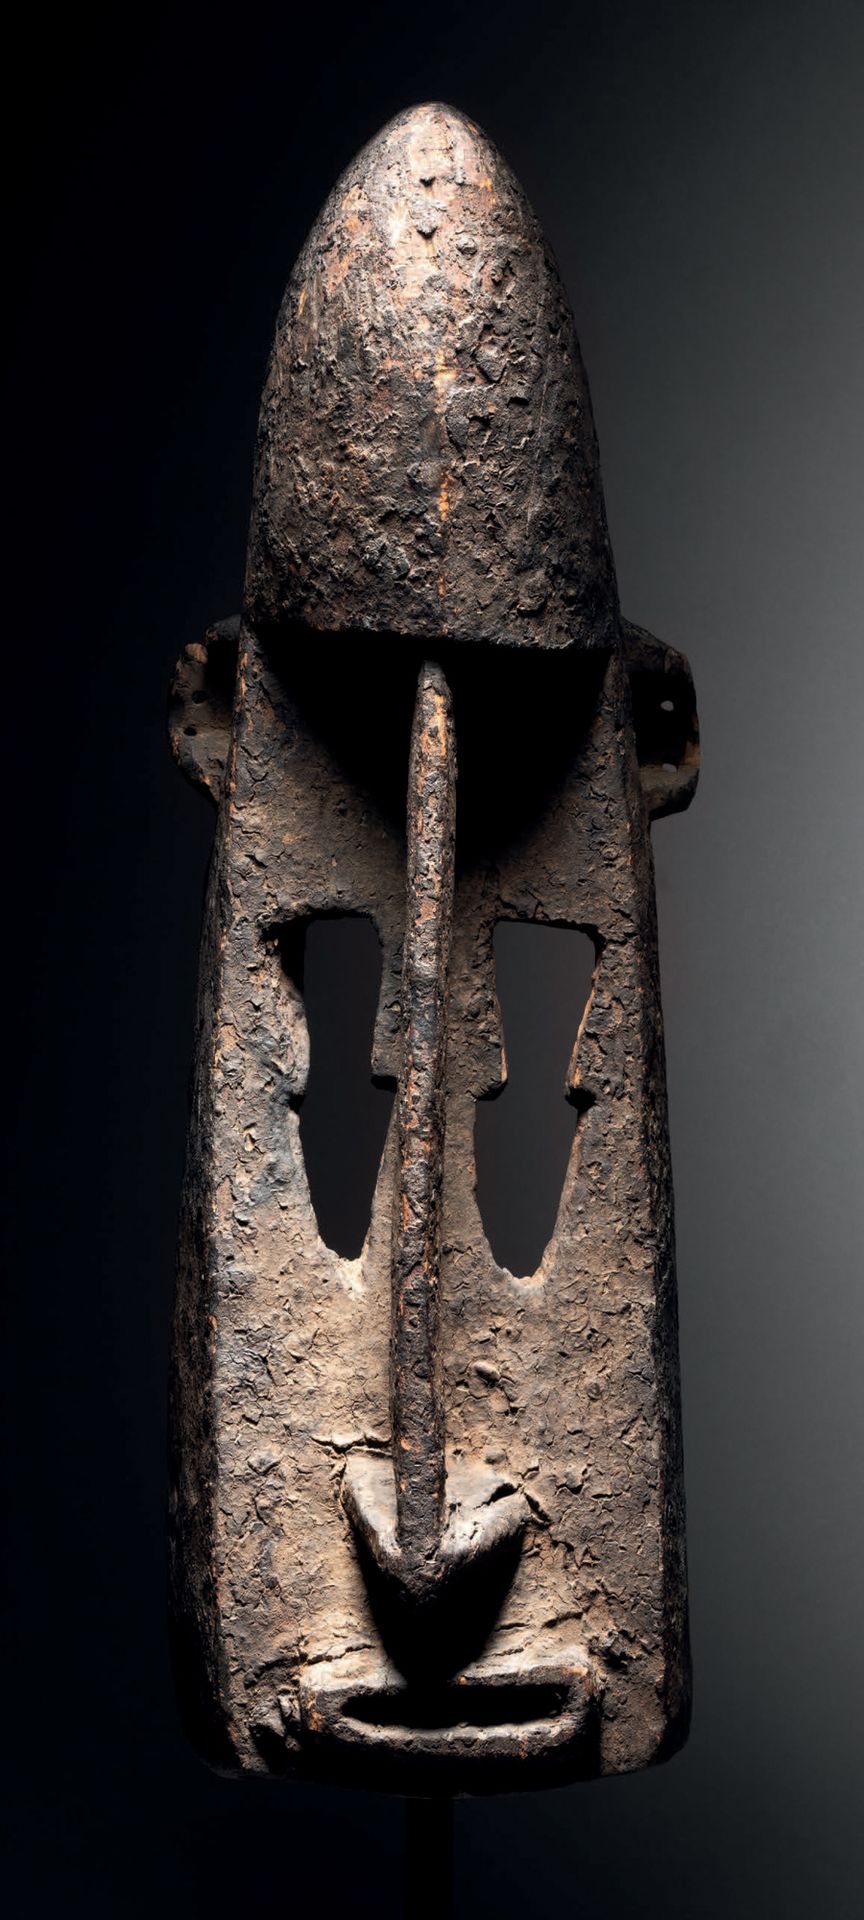 Null Maske, Dogon, Mali
Holz mit krustiger Patina
H. 50 cm
Dogon-Maske, Mali
H. &hellip;